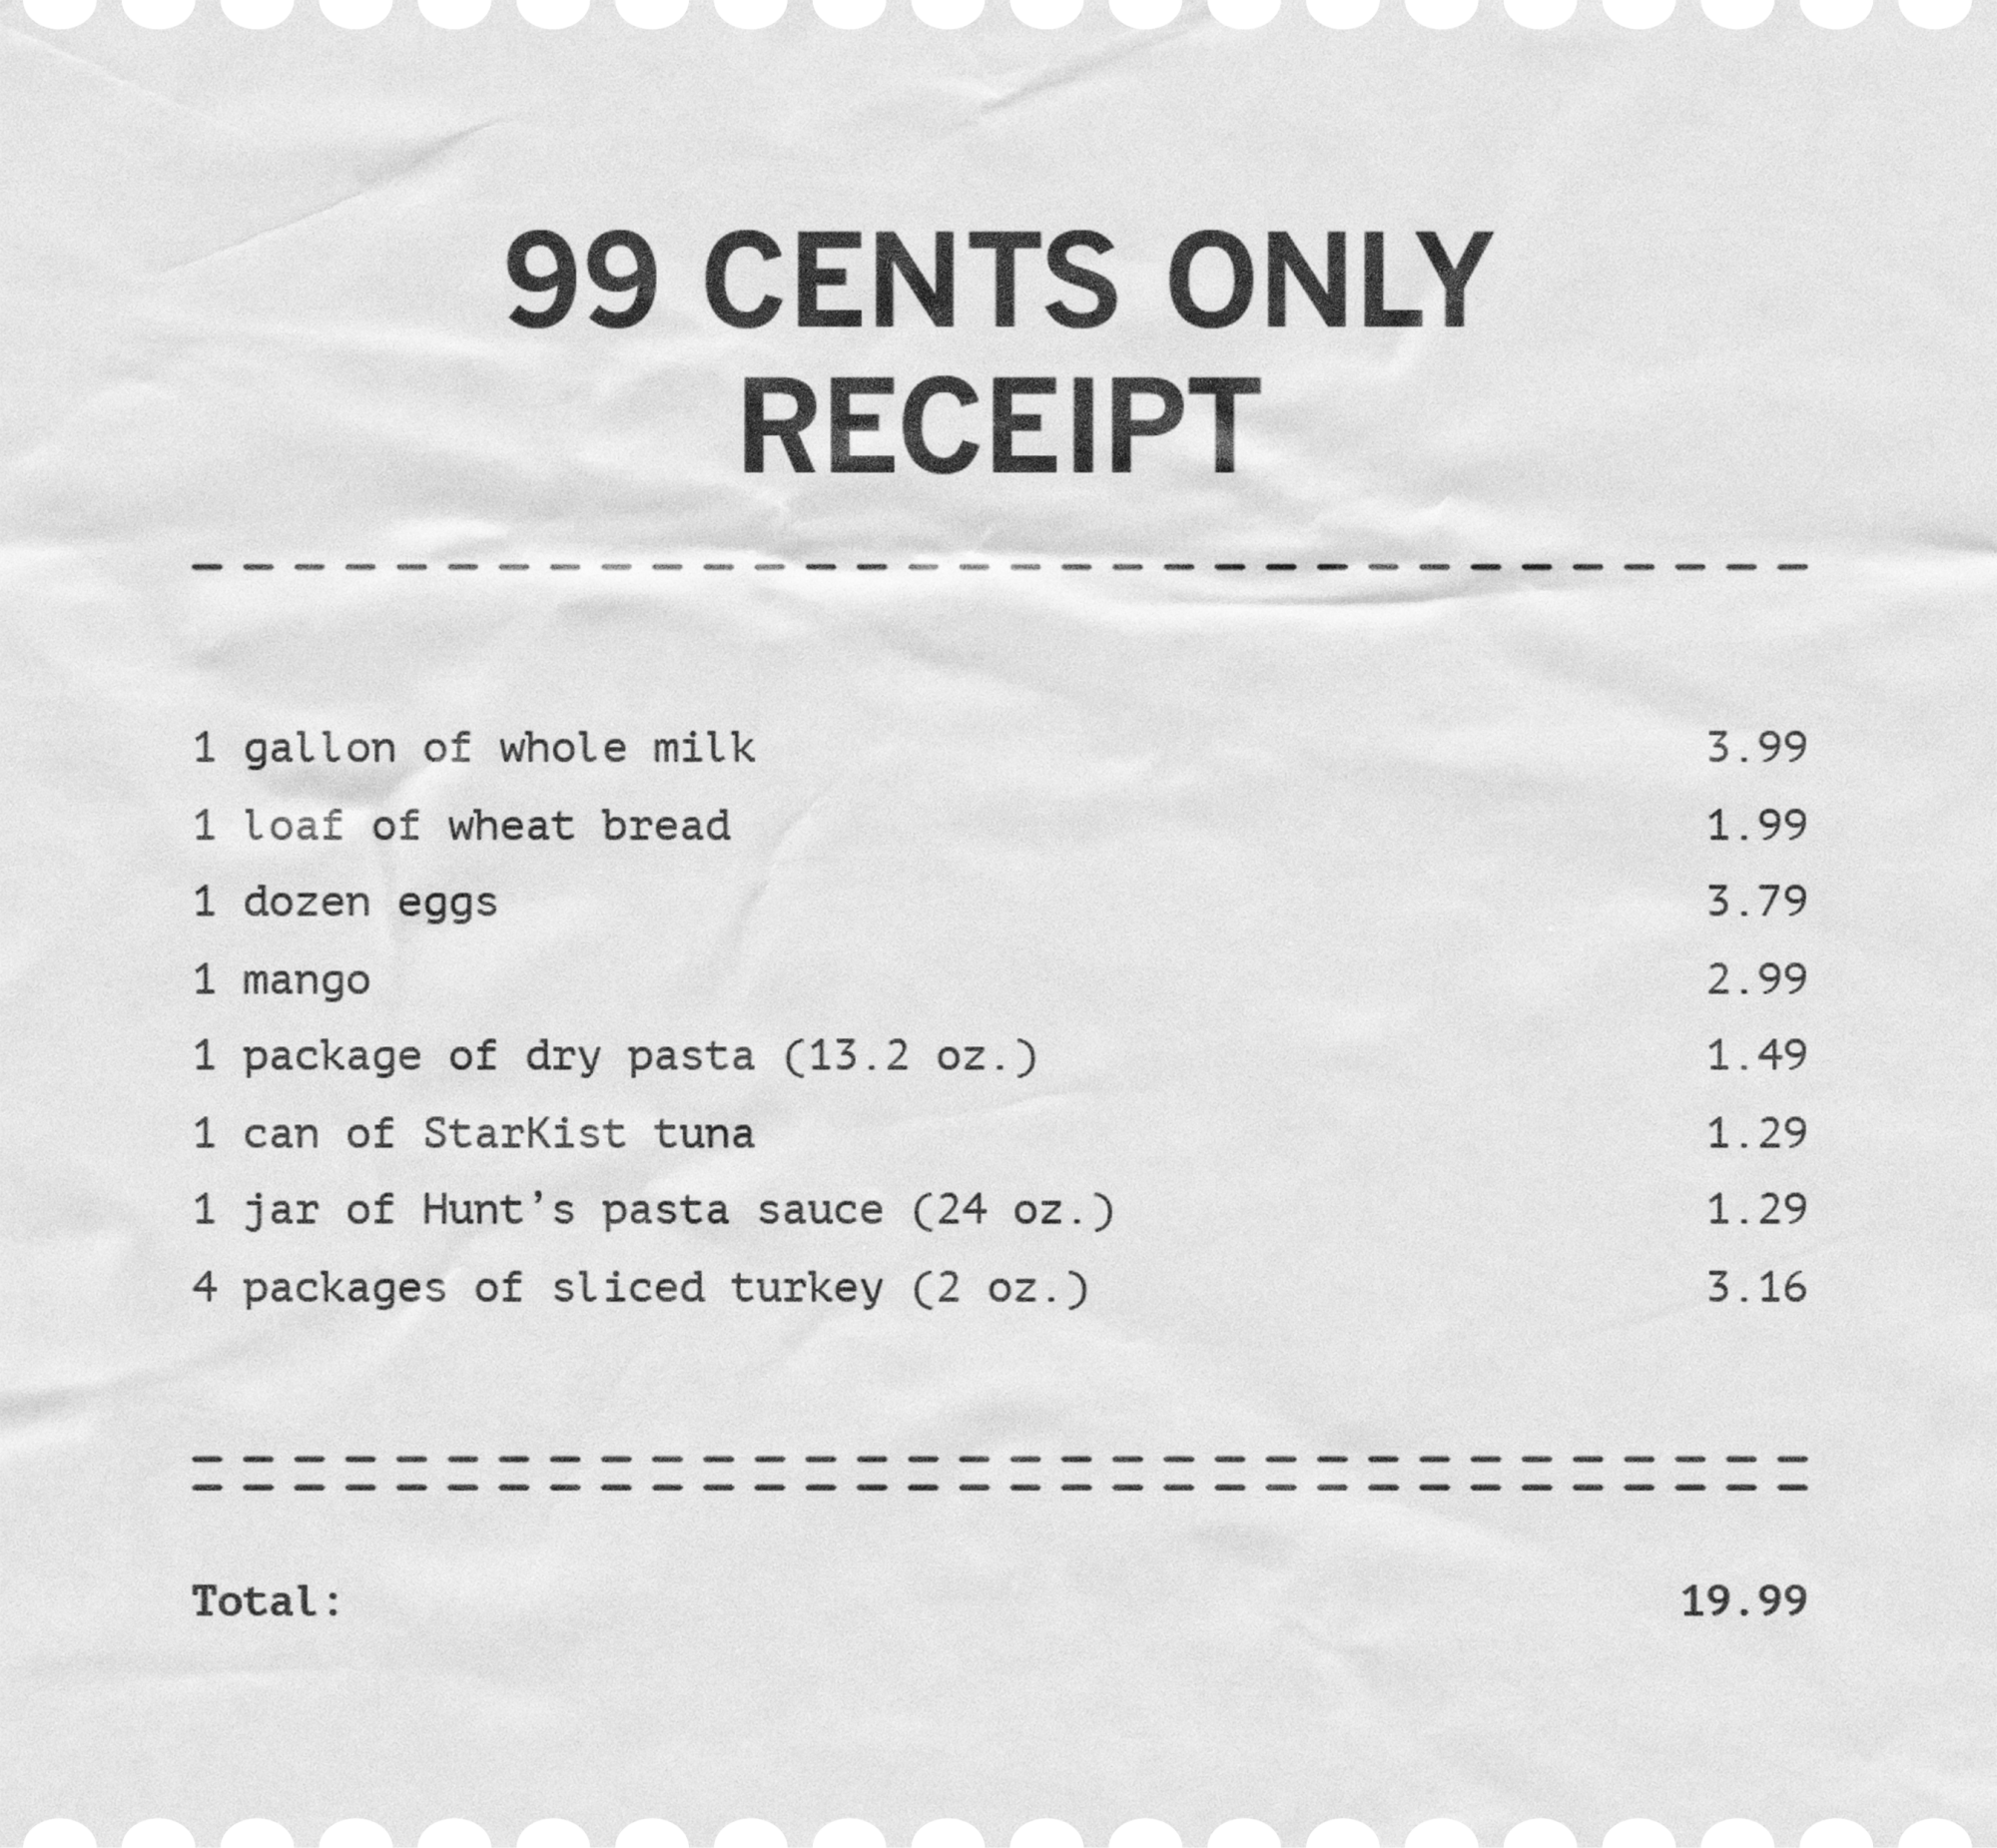 99 cent receipt only